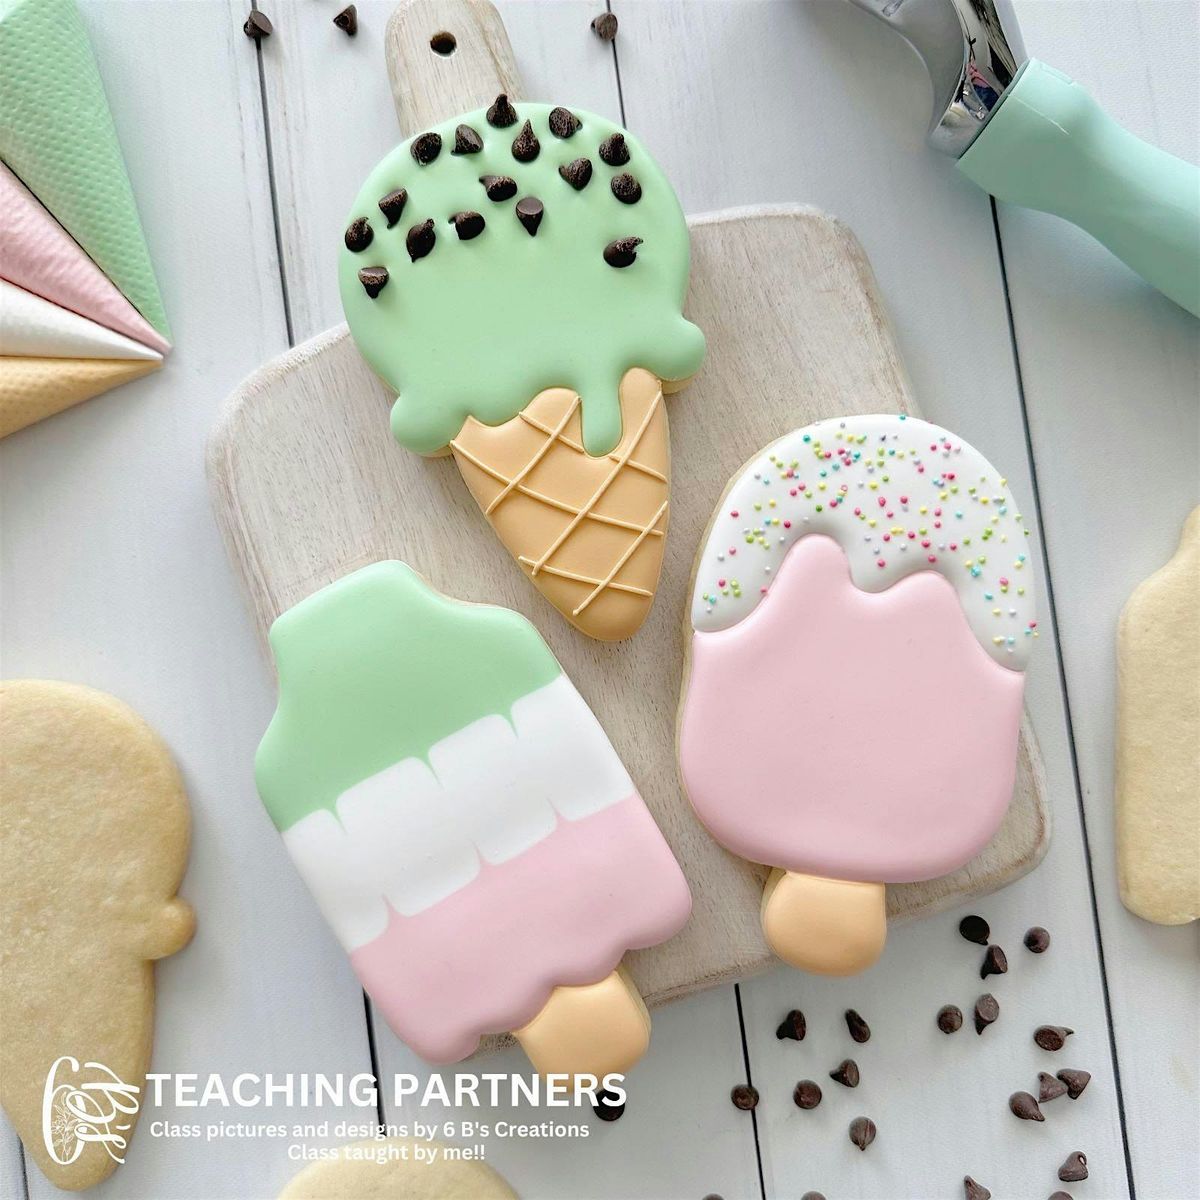 Sprinkles & Scoops: Kids Cookie Decorating Class